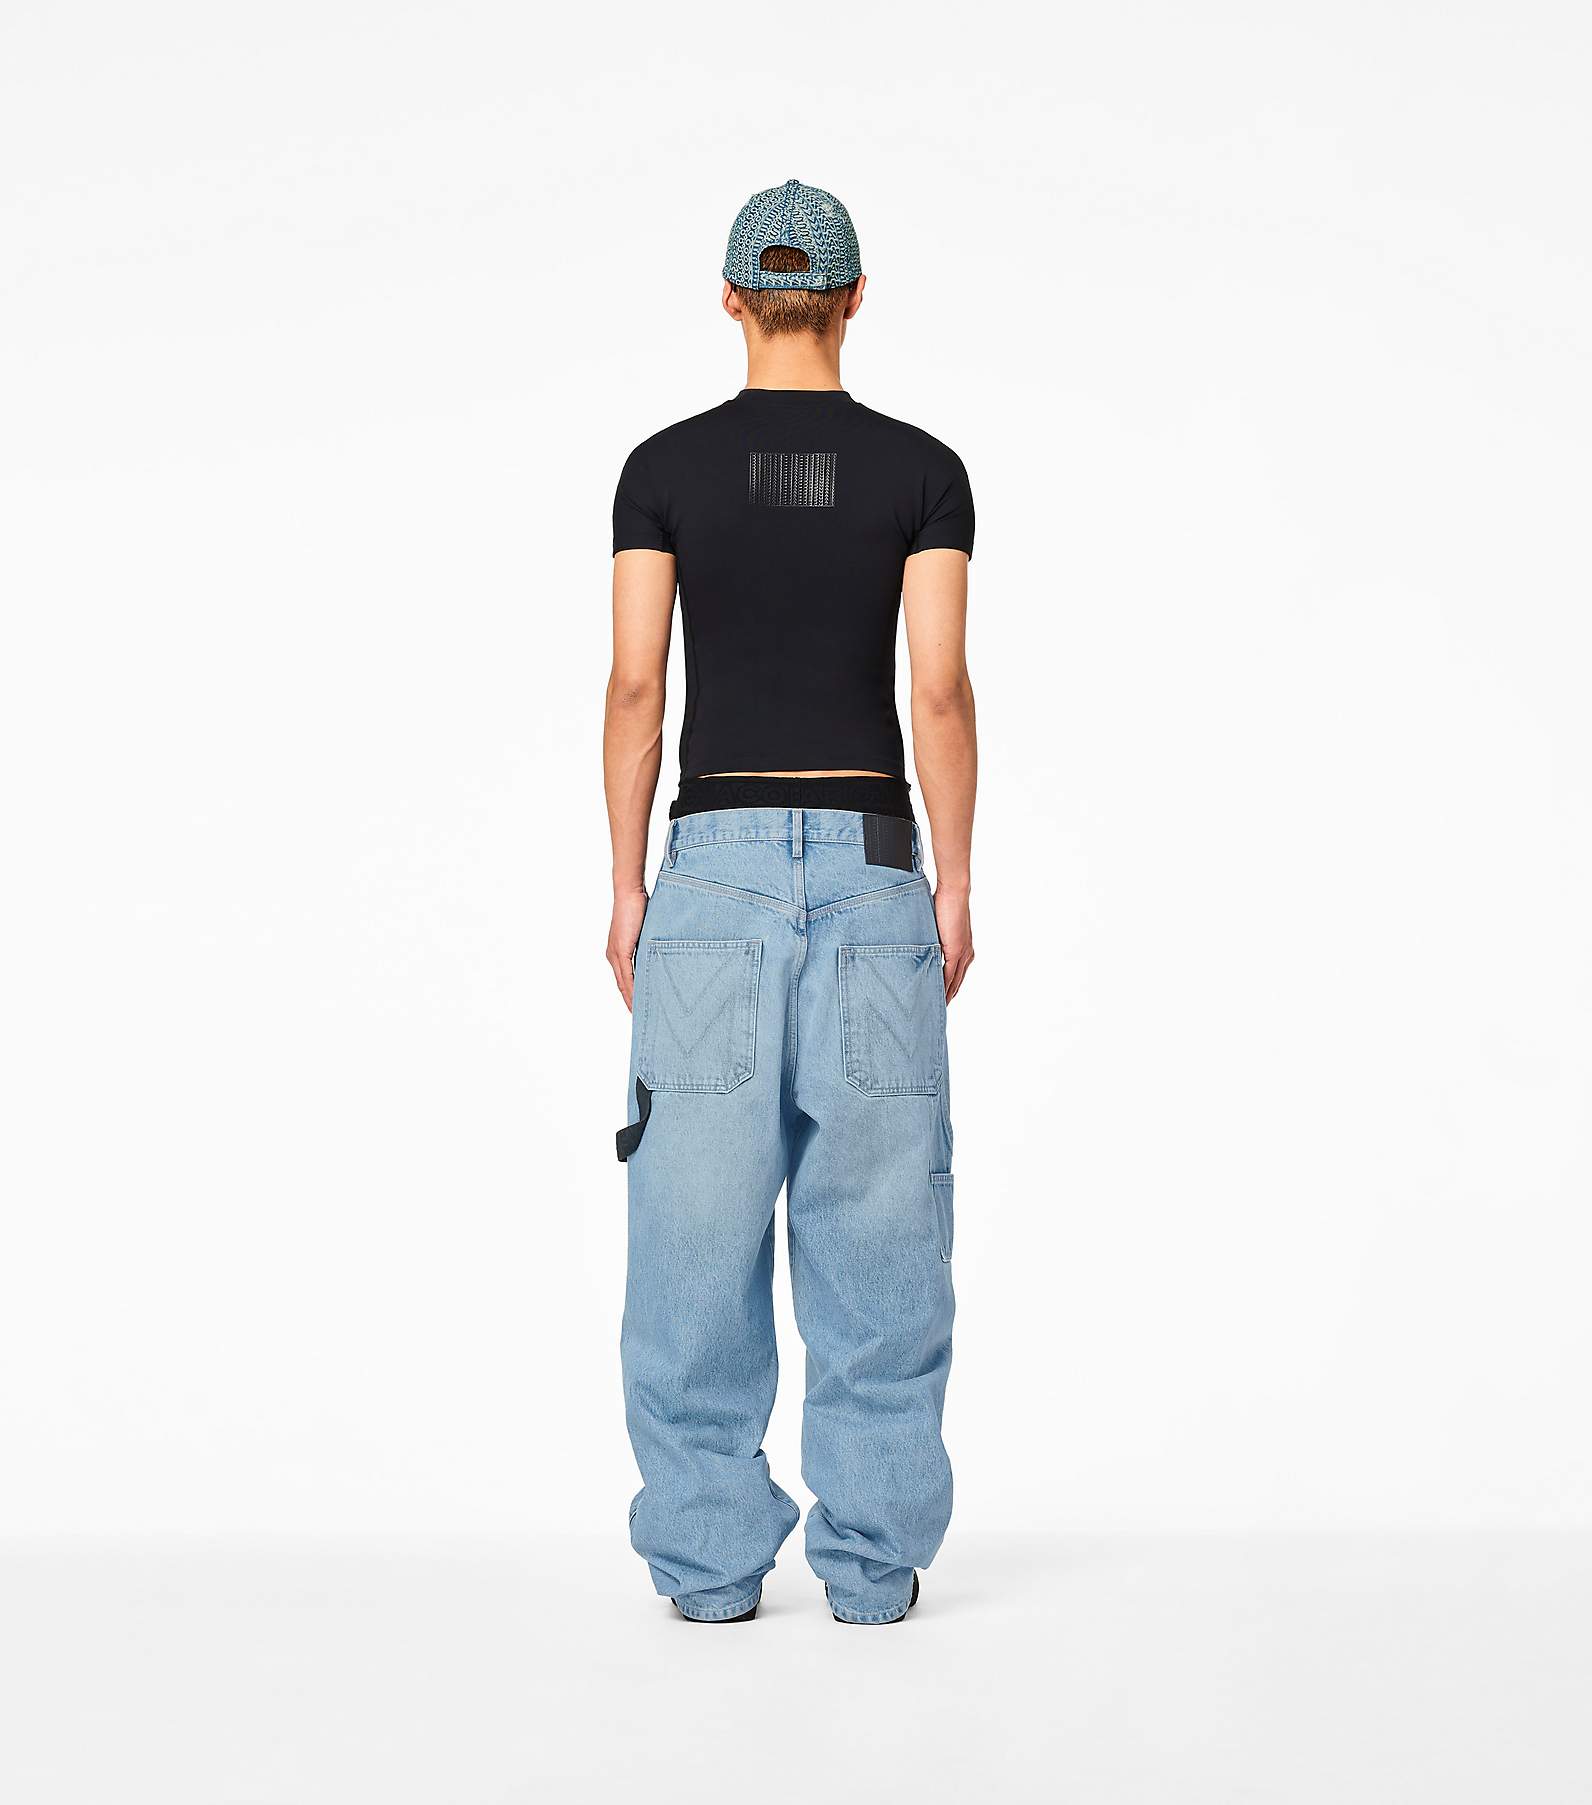 Marc Jacobs Blue 'The Oversized Carpenter Jean' Jeans